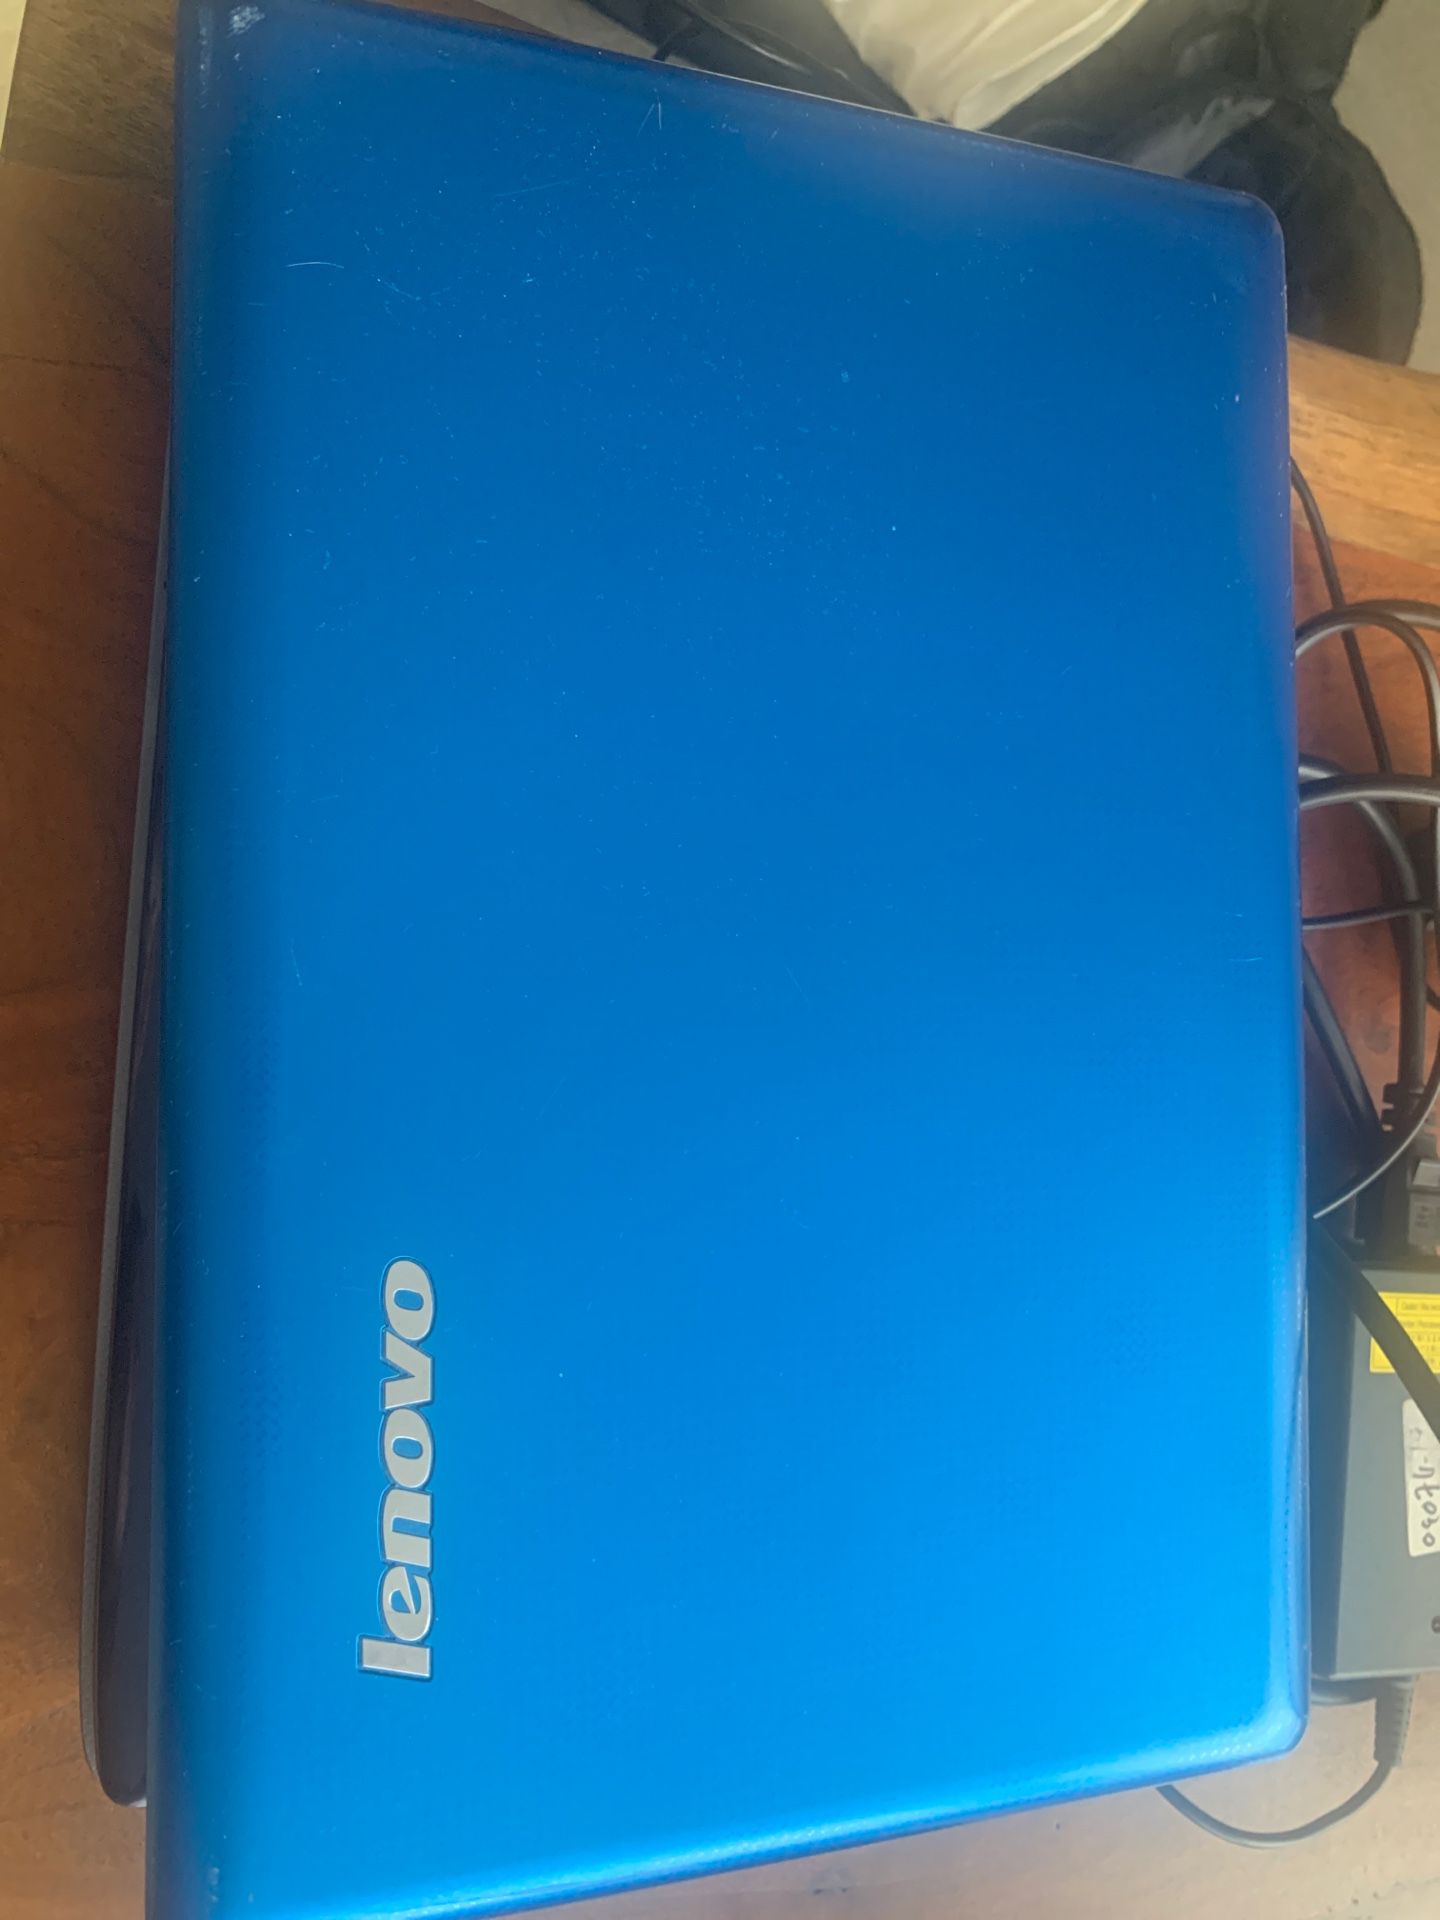 Lenovo laptop with free computer bag